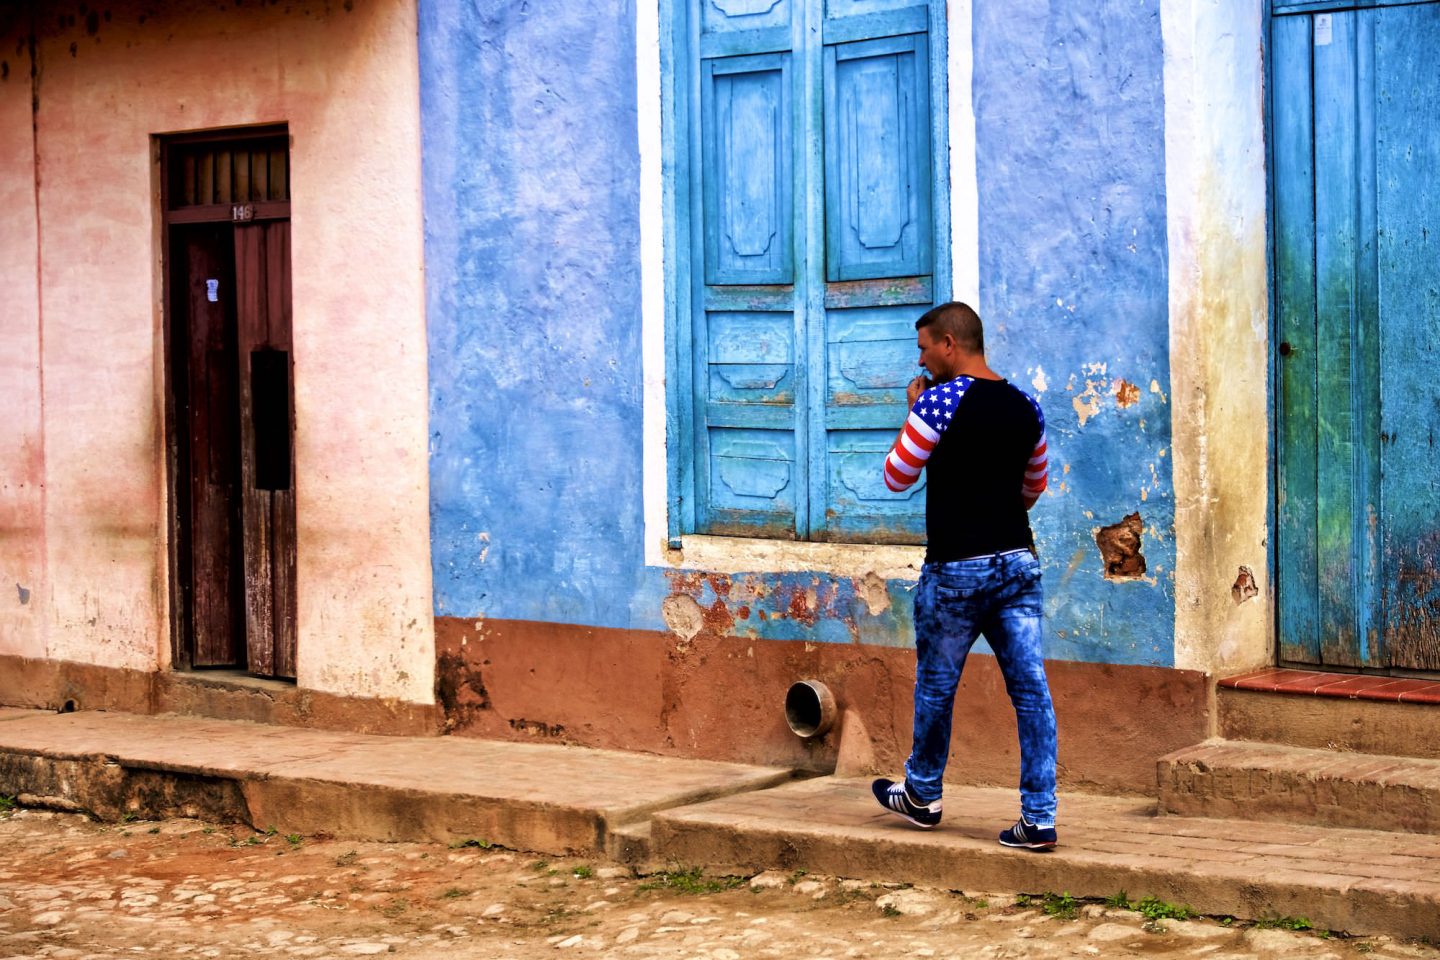 Cuban man wearing an American-flag shirt. Trinidad. Daily life in Cuba